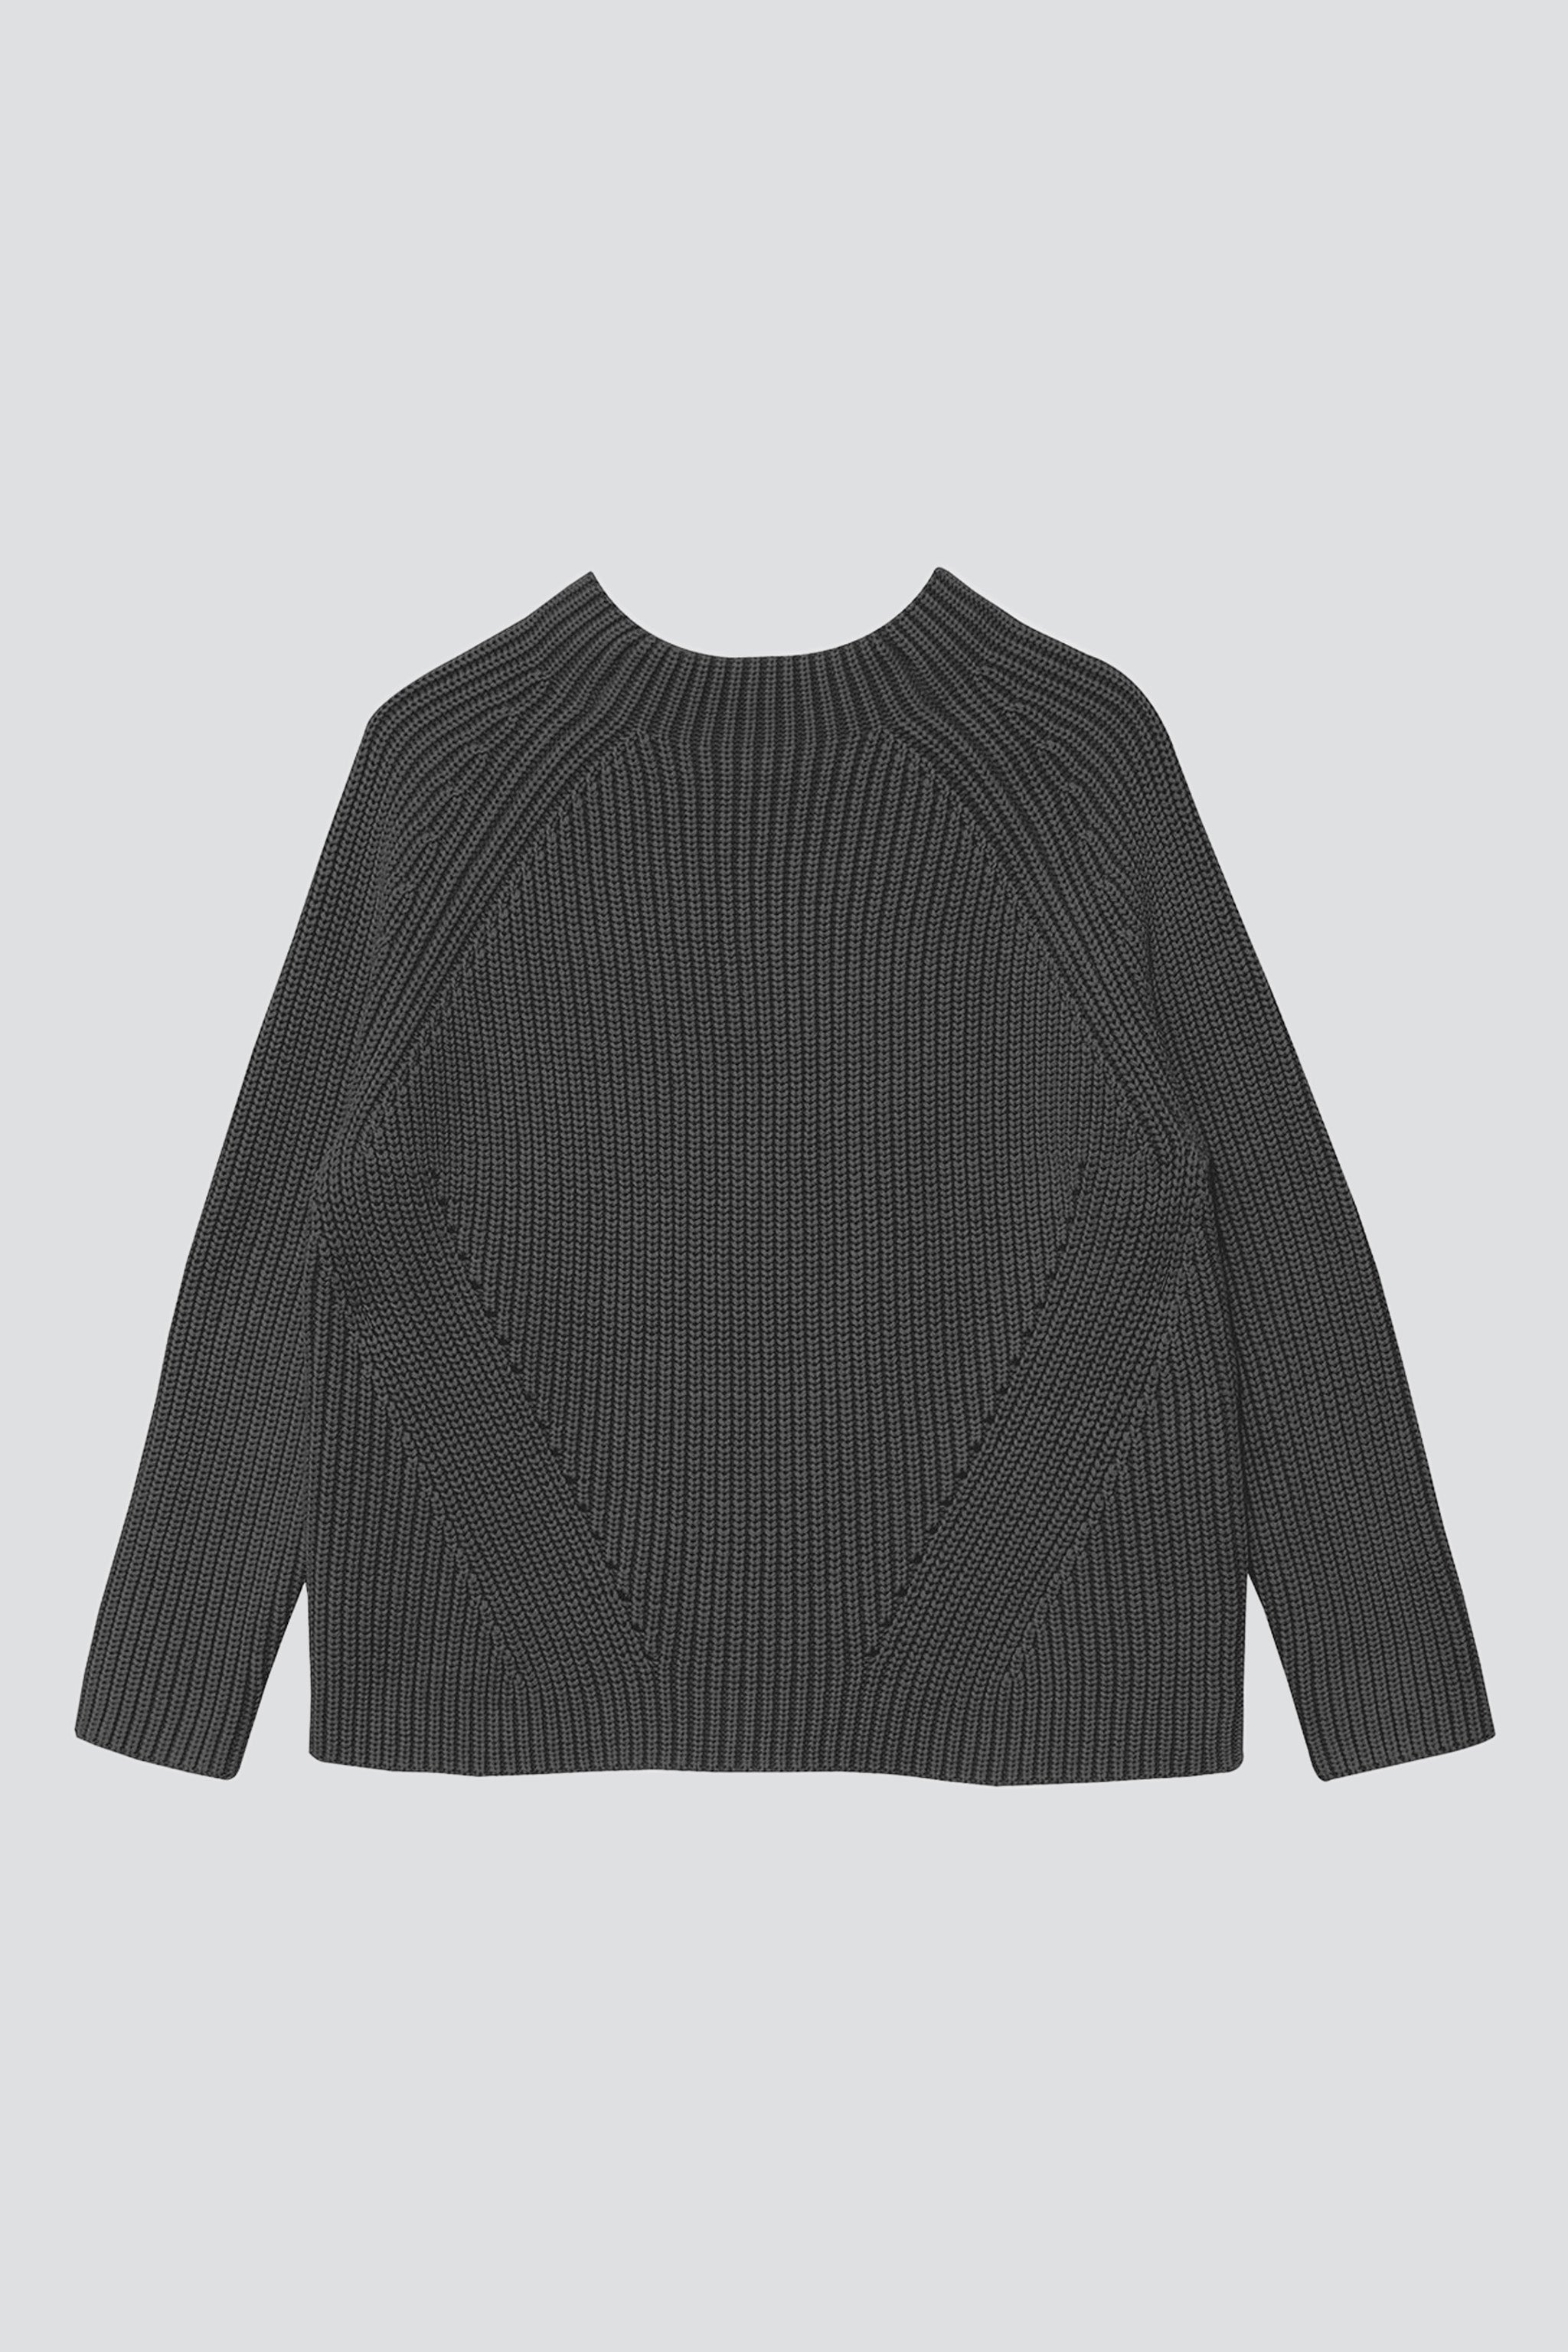 Black Daphne Sweater